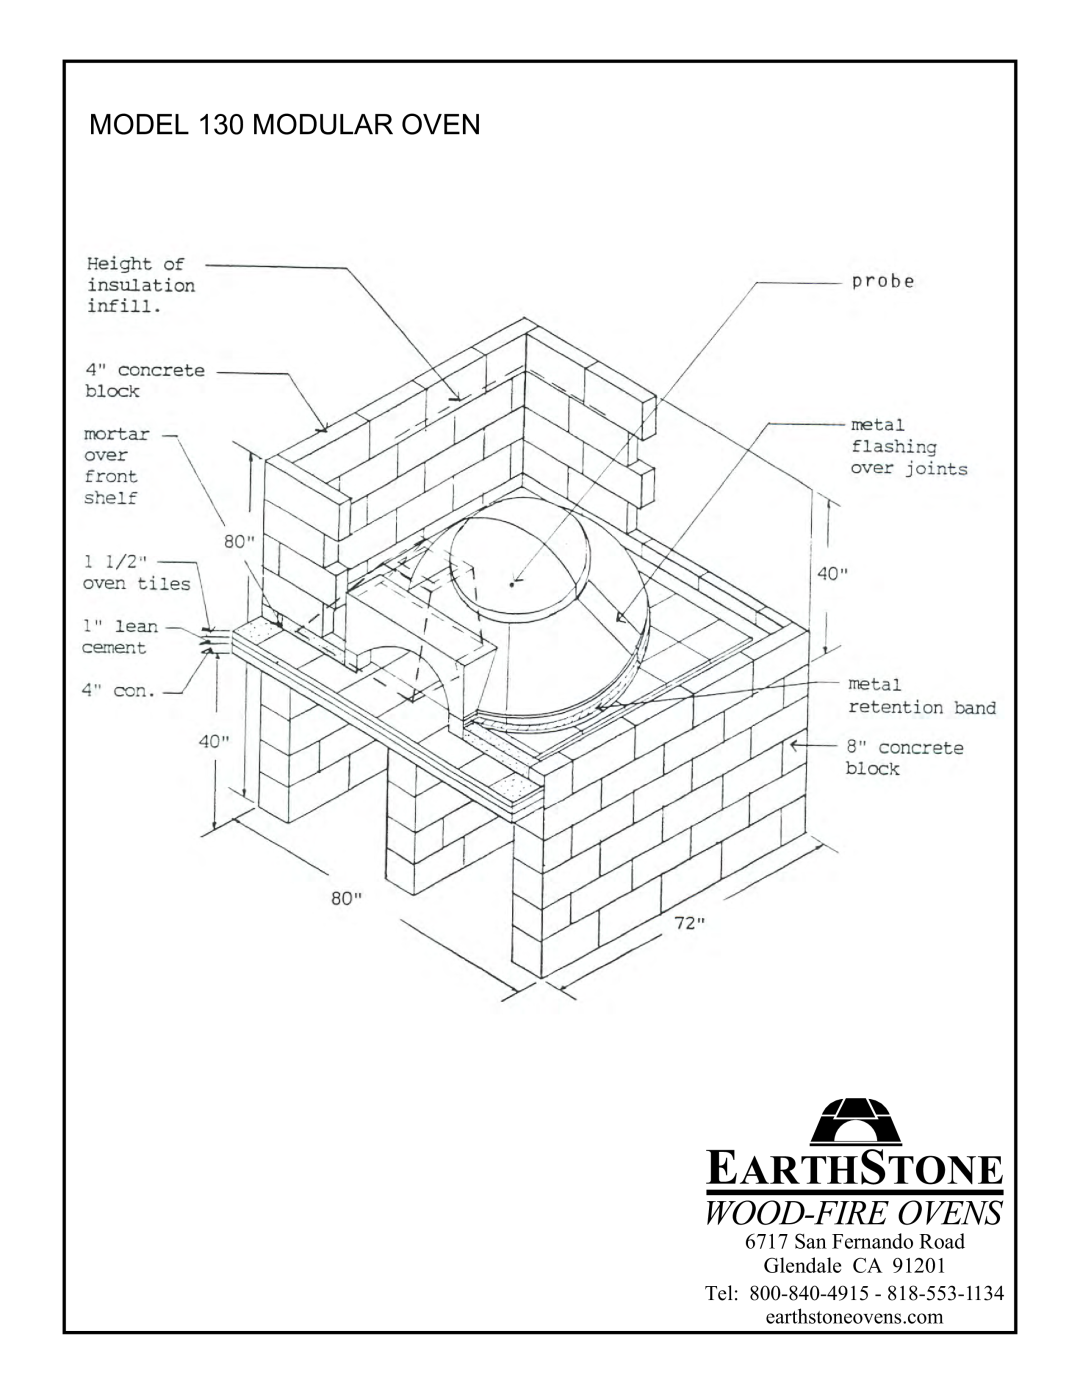 EarthStone installation instructions Earthstone, Wood-Fireovens, MODEL 130 MODULAR OVEN, San Fernando Road Glendale CA 